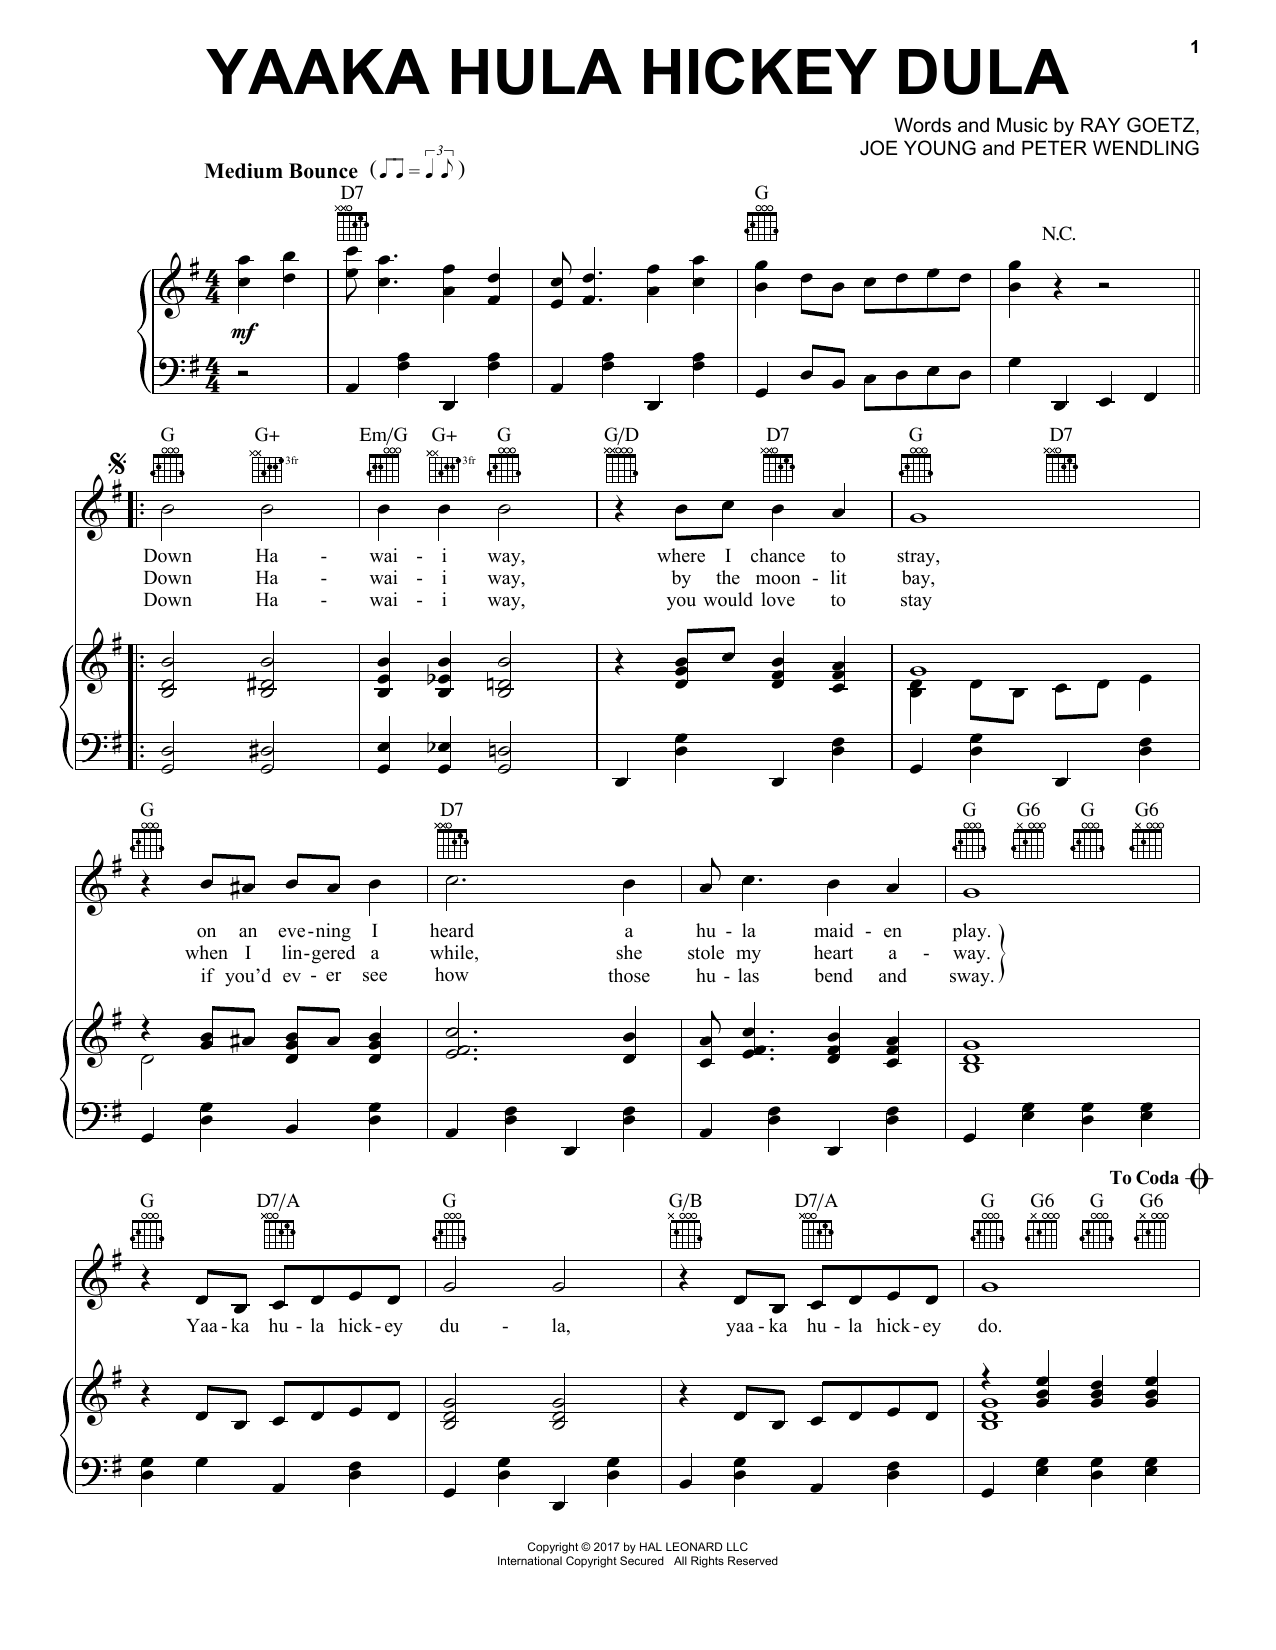 Ray Goetz Yaaka Hula Hickey Dula Sheet Music Notes & Chords for Piano, Vocal & Guitar (Right-Hand Melody) - Download or Print PDF